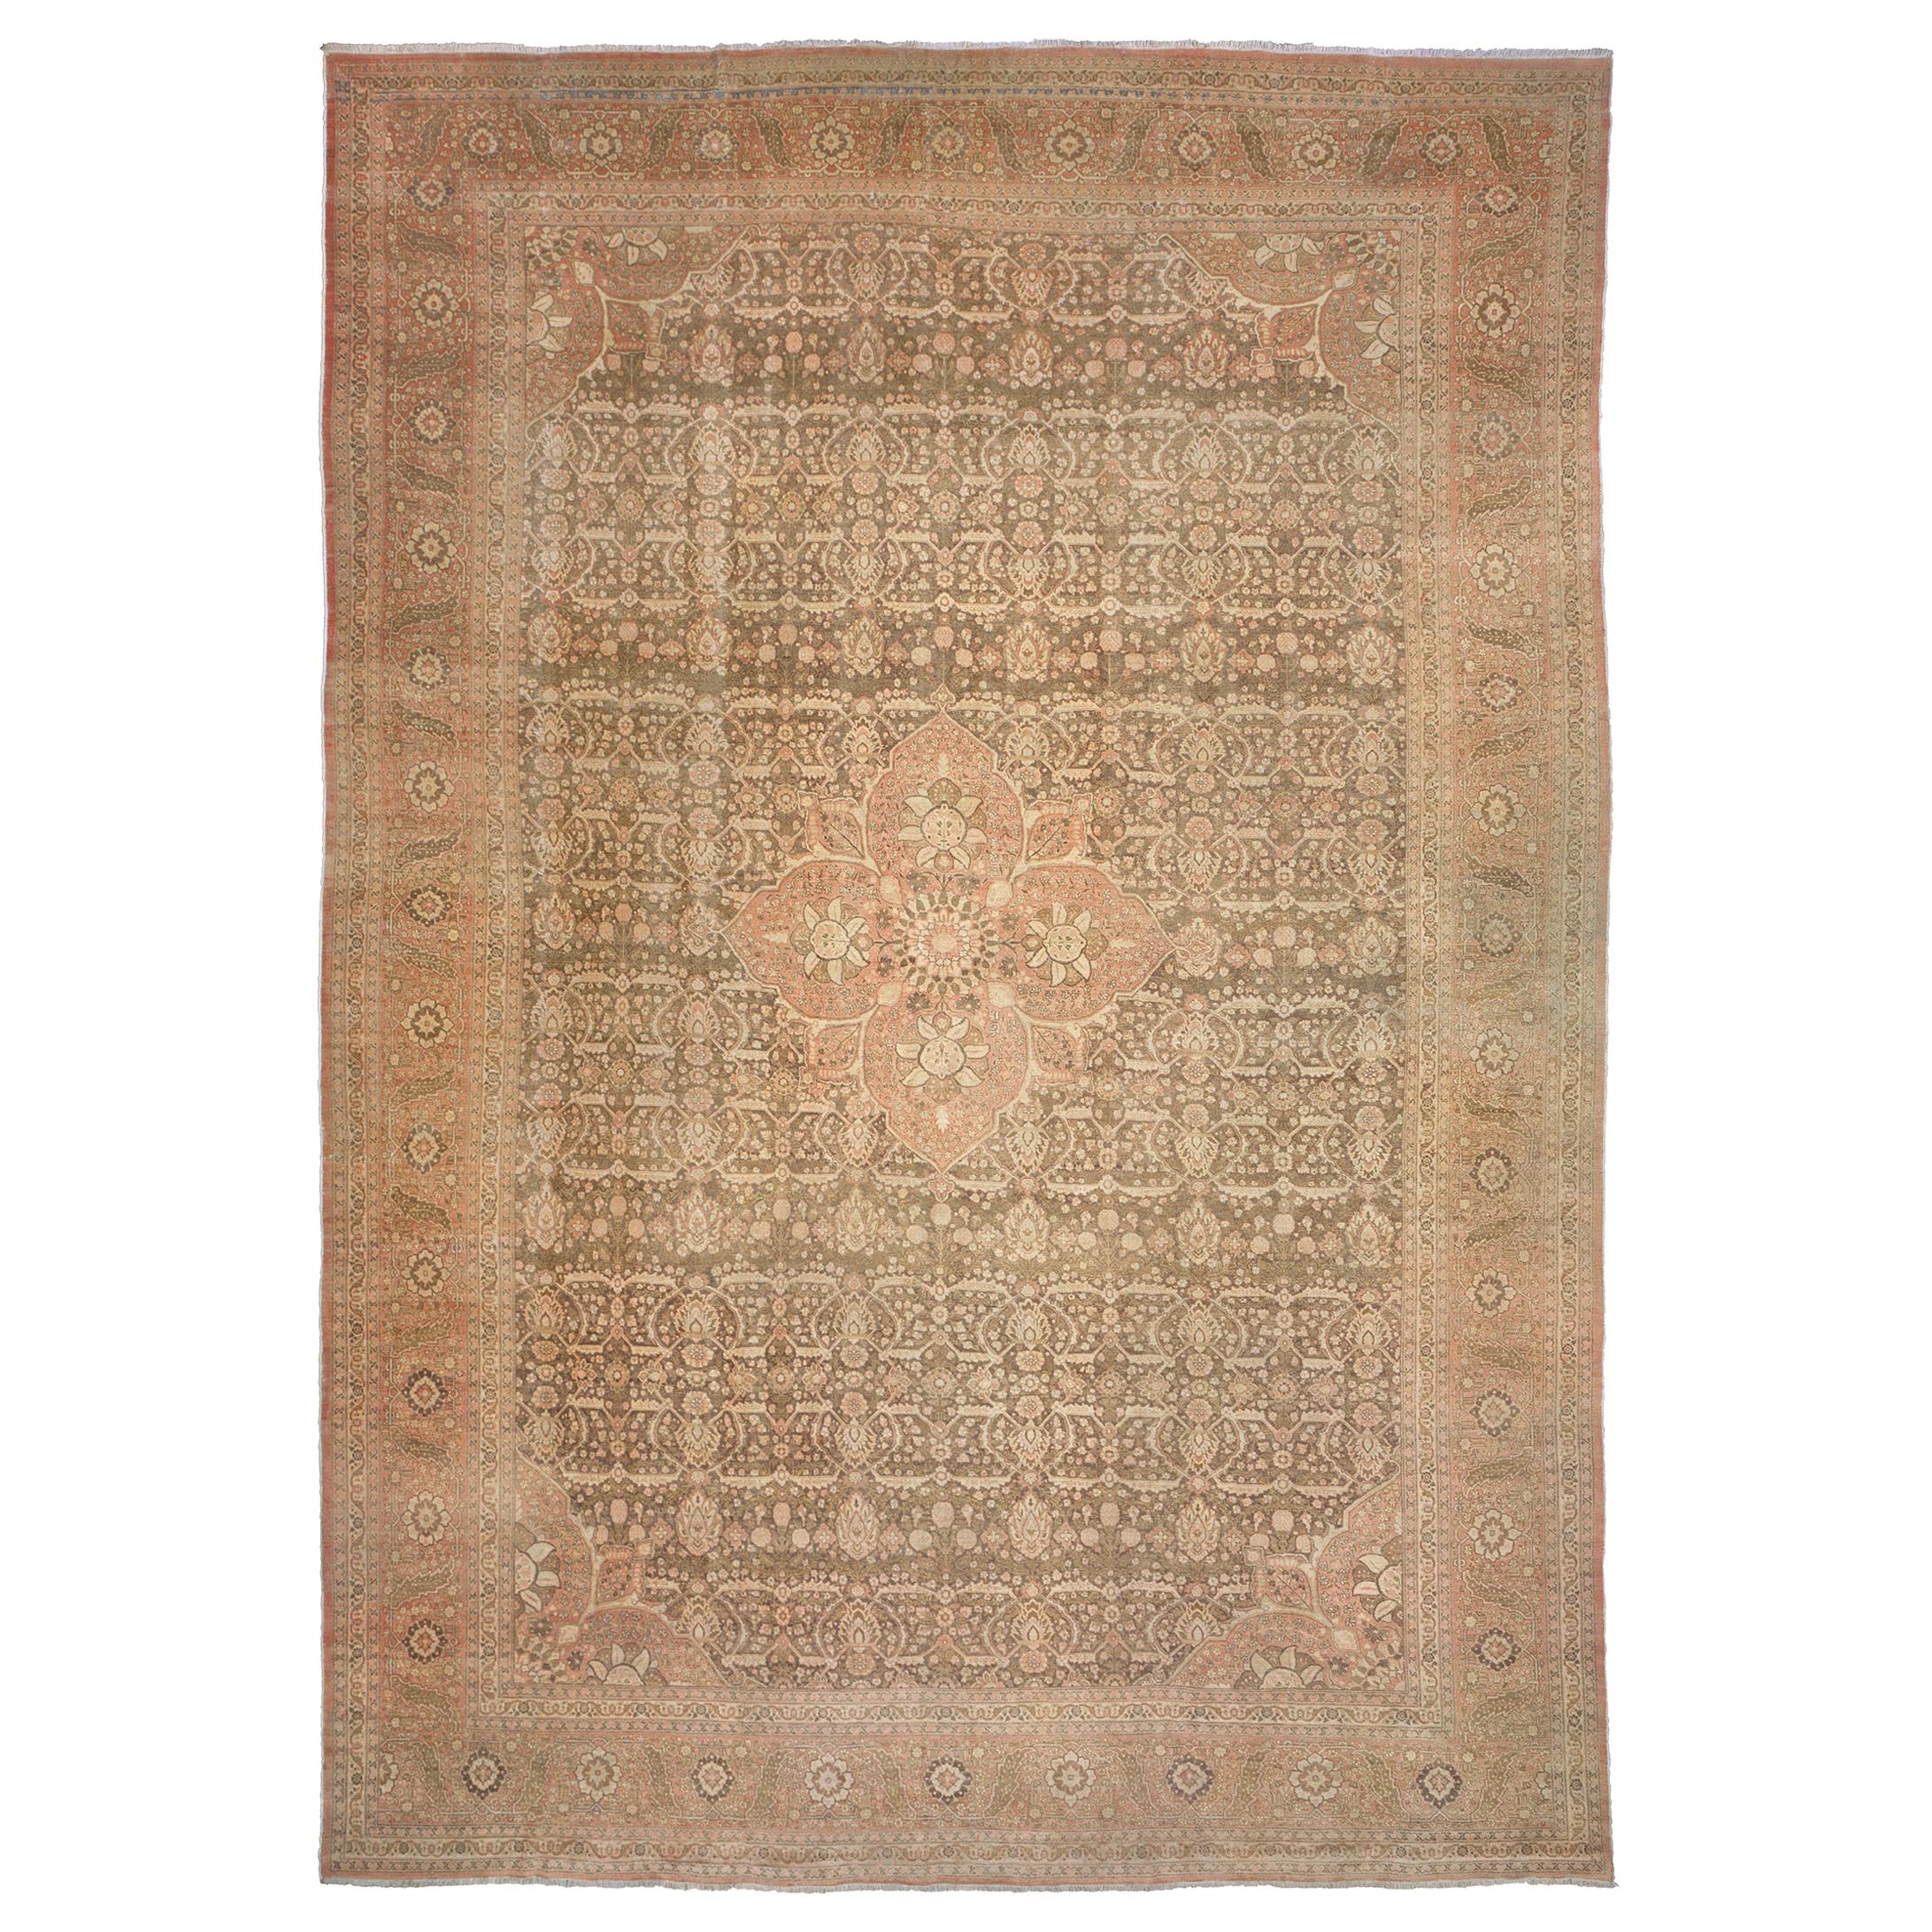 Early 20th Century Persian Tabriz Rug